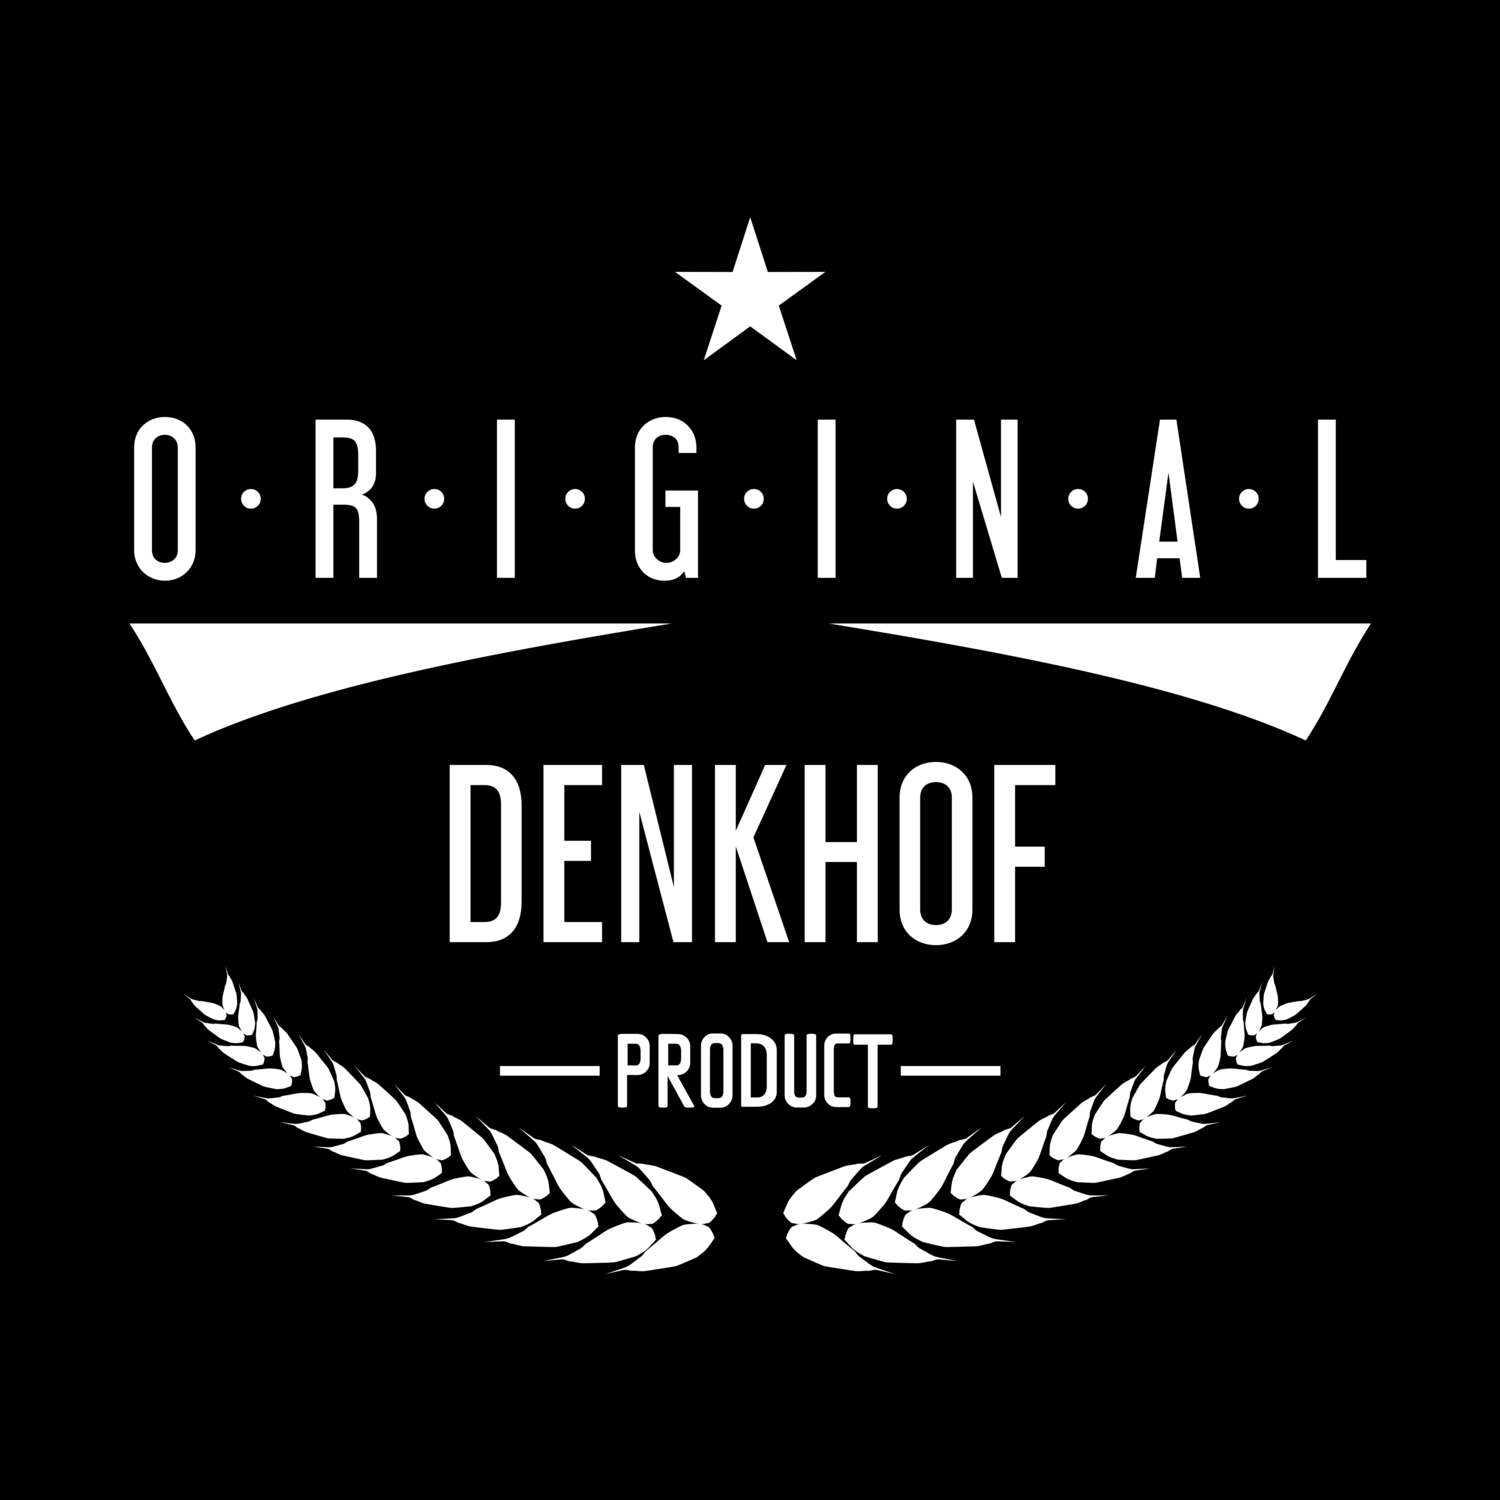 Denkhof T-Shirt »Original Product«